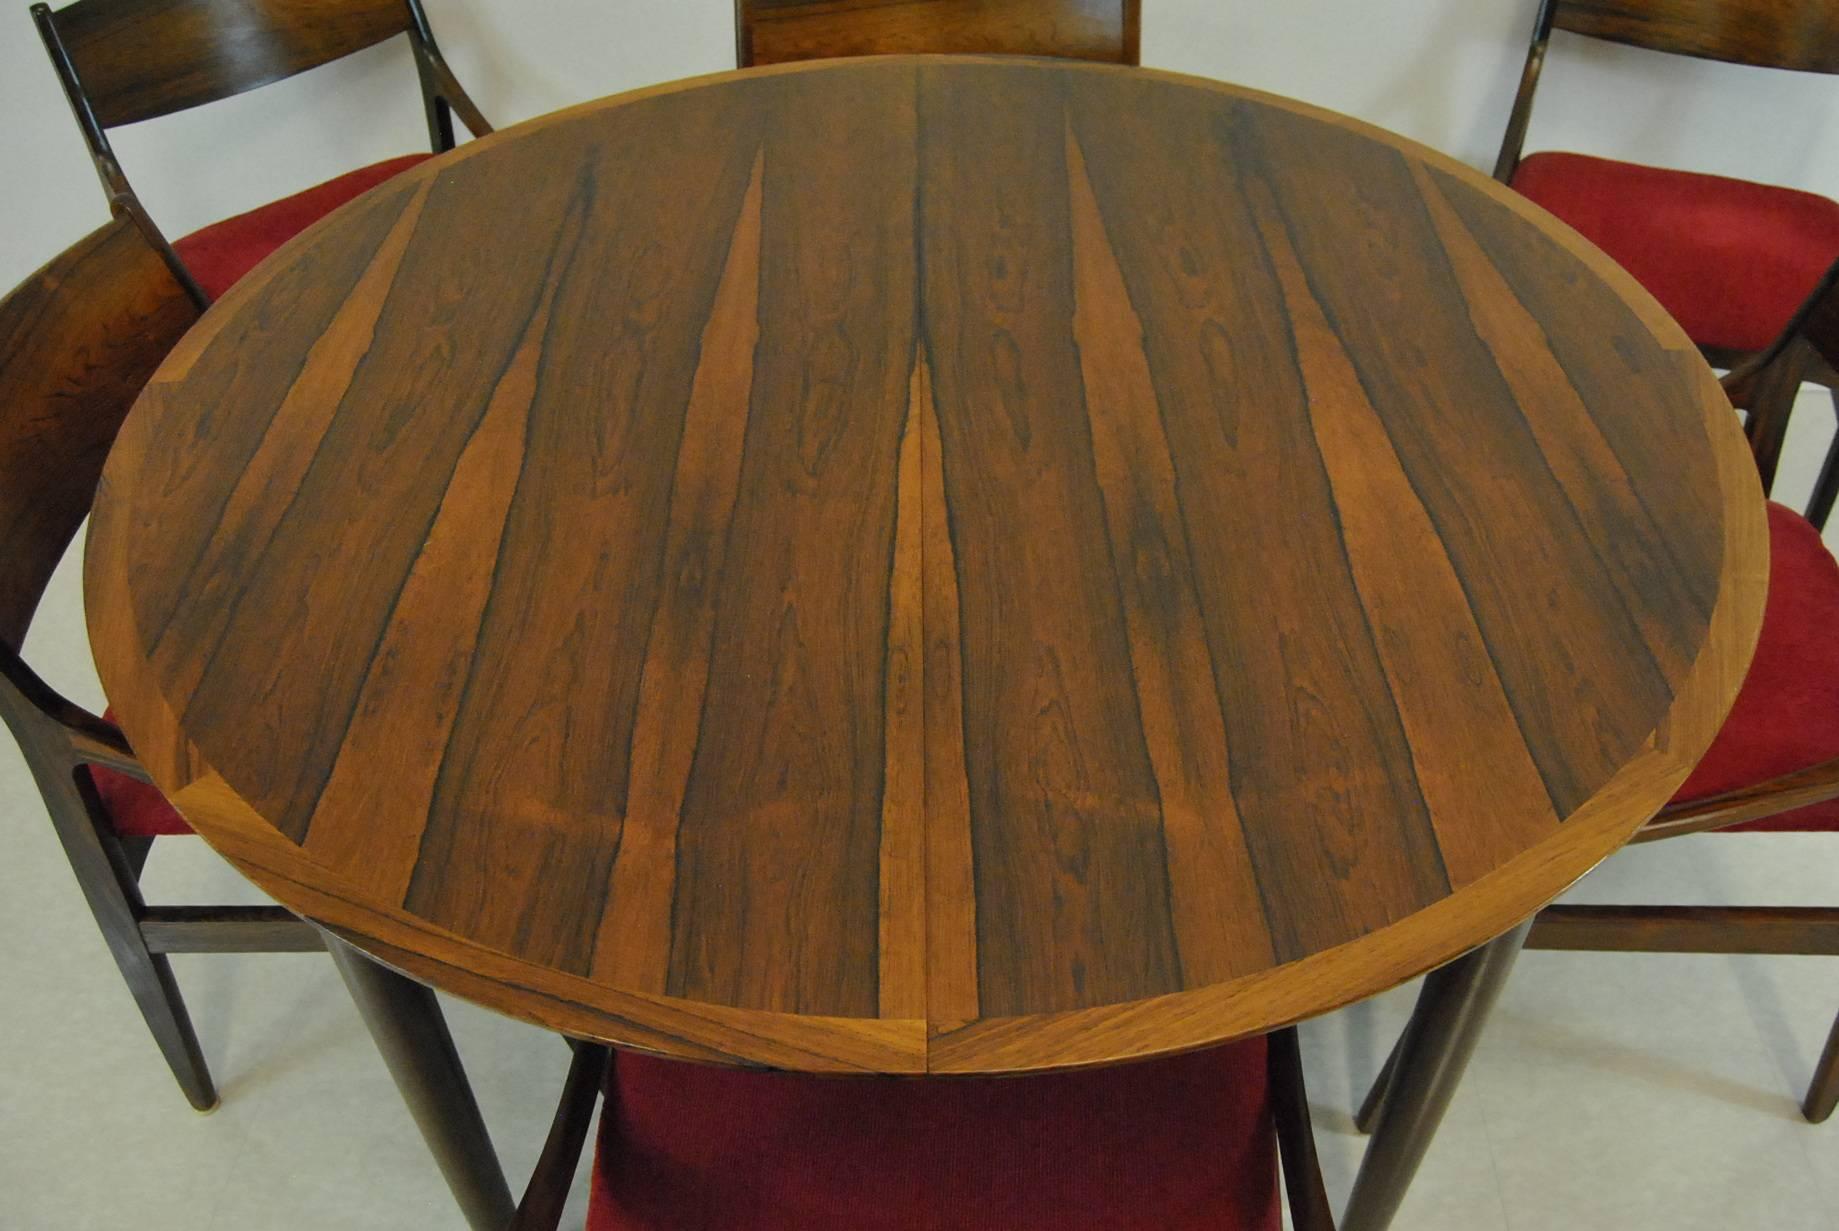 A beautiful Danish Modern rosewood dining set. Set includes a 48